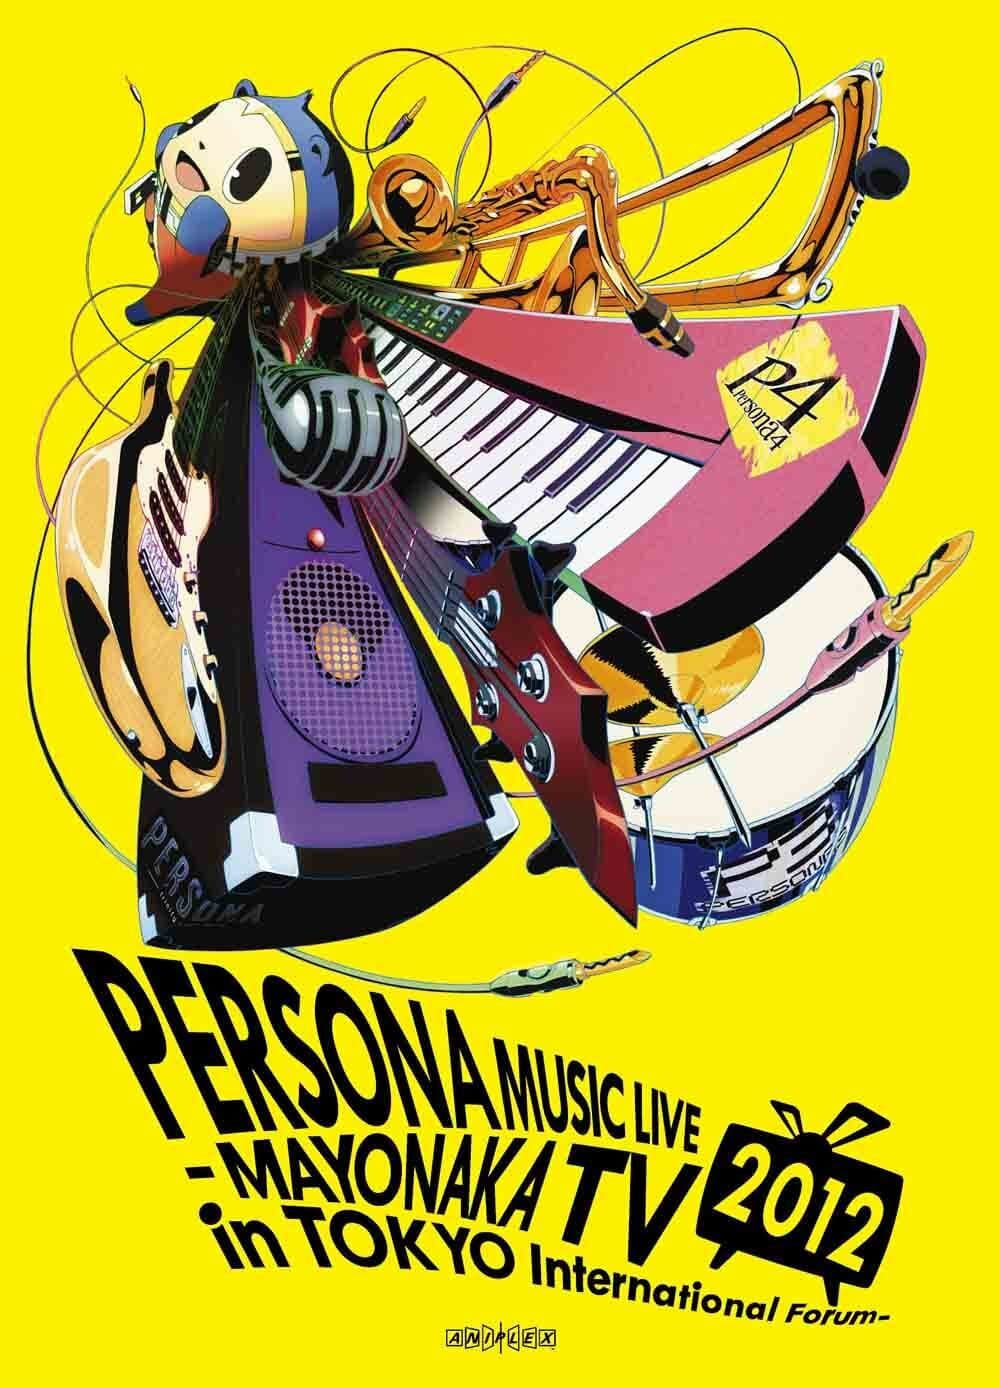 PERSONA Music Live 2012 - Mayonaka TV in Tokyo International Forum